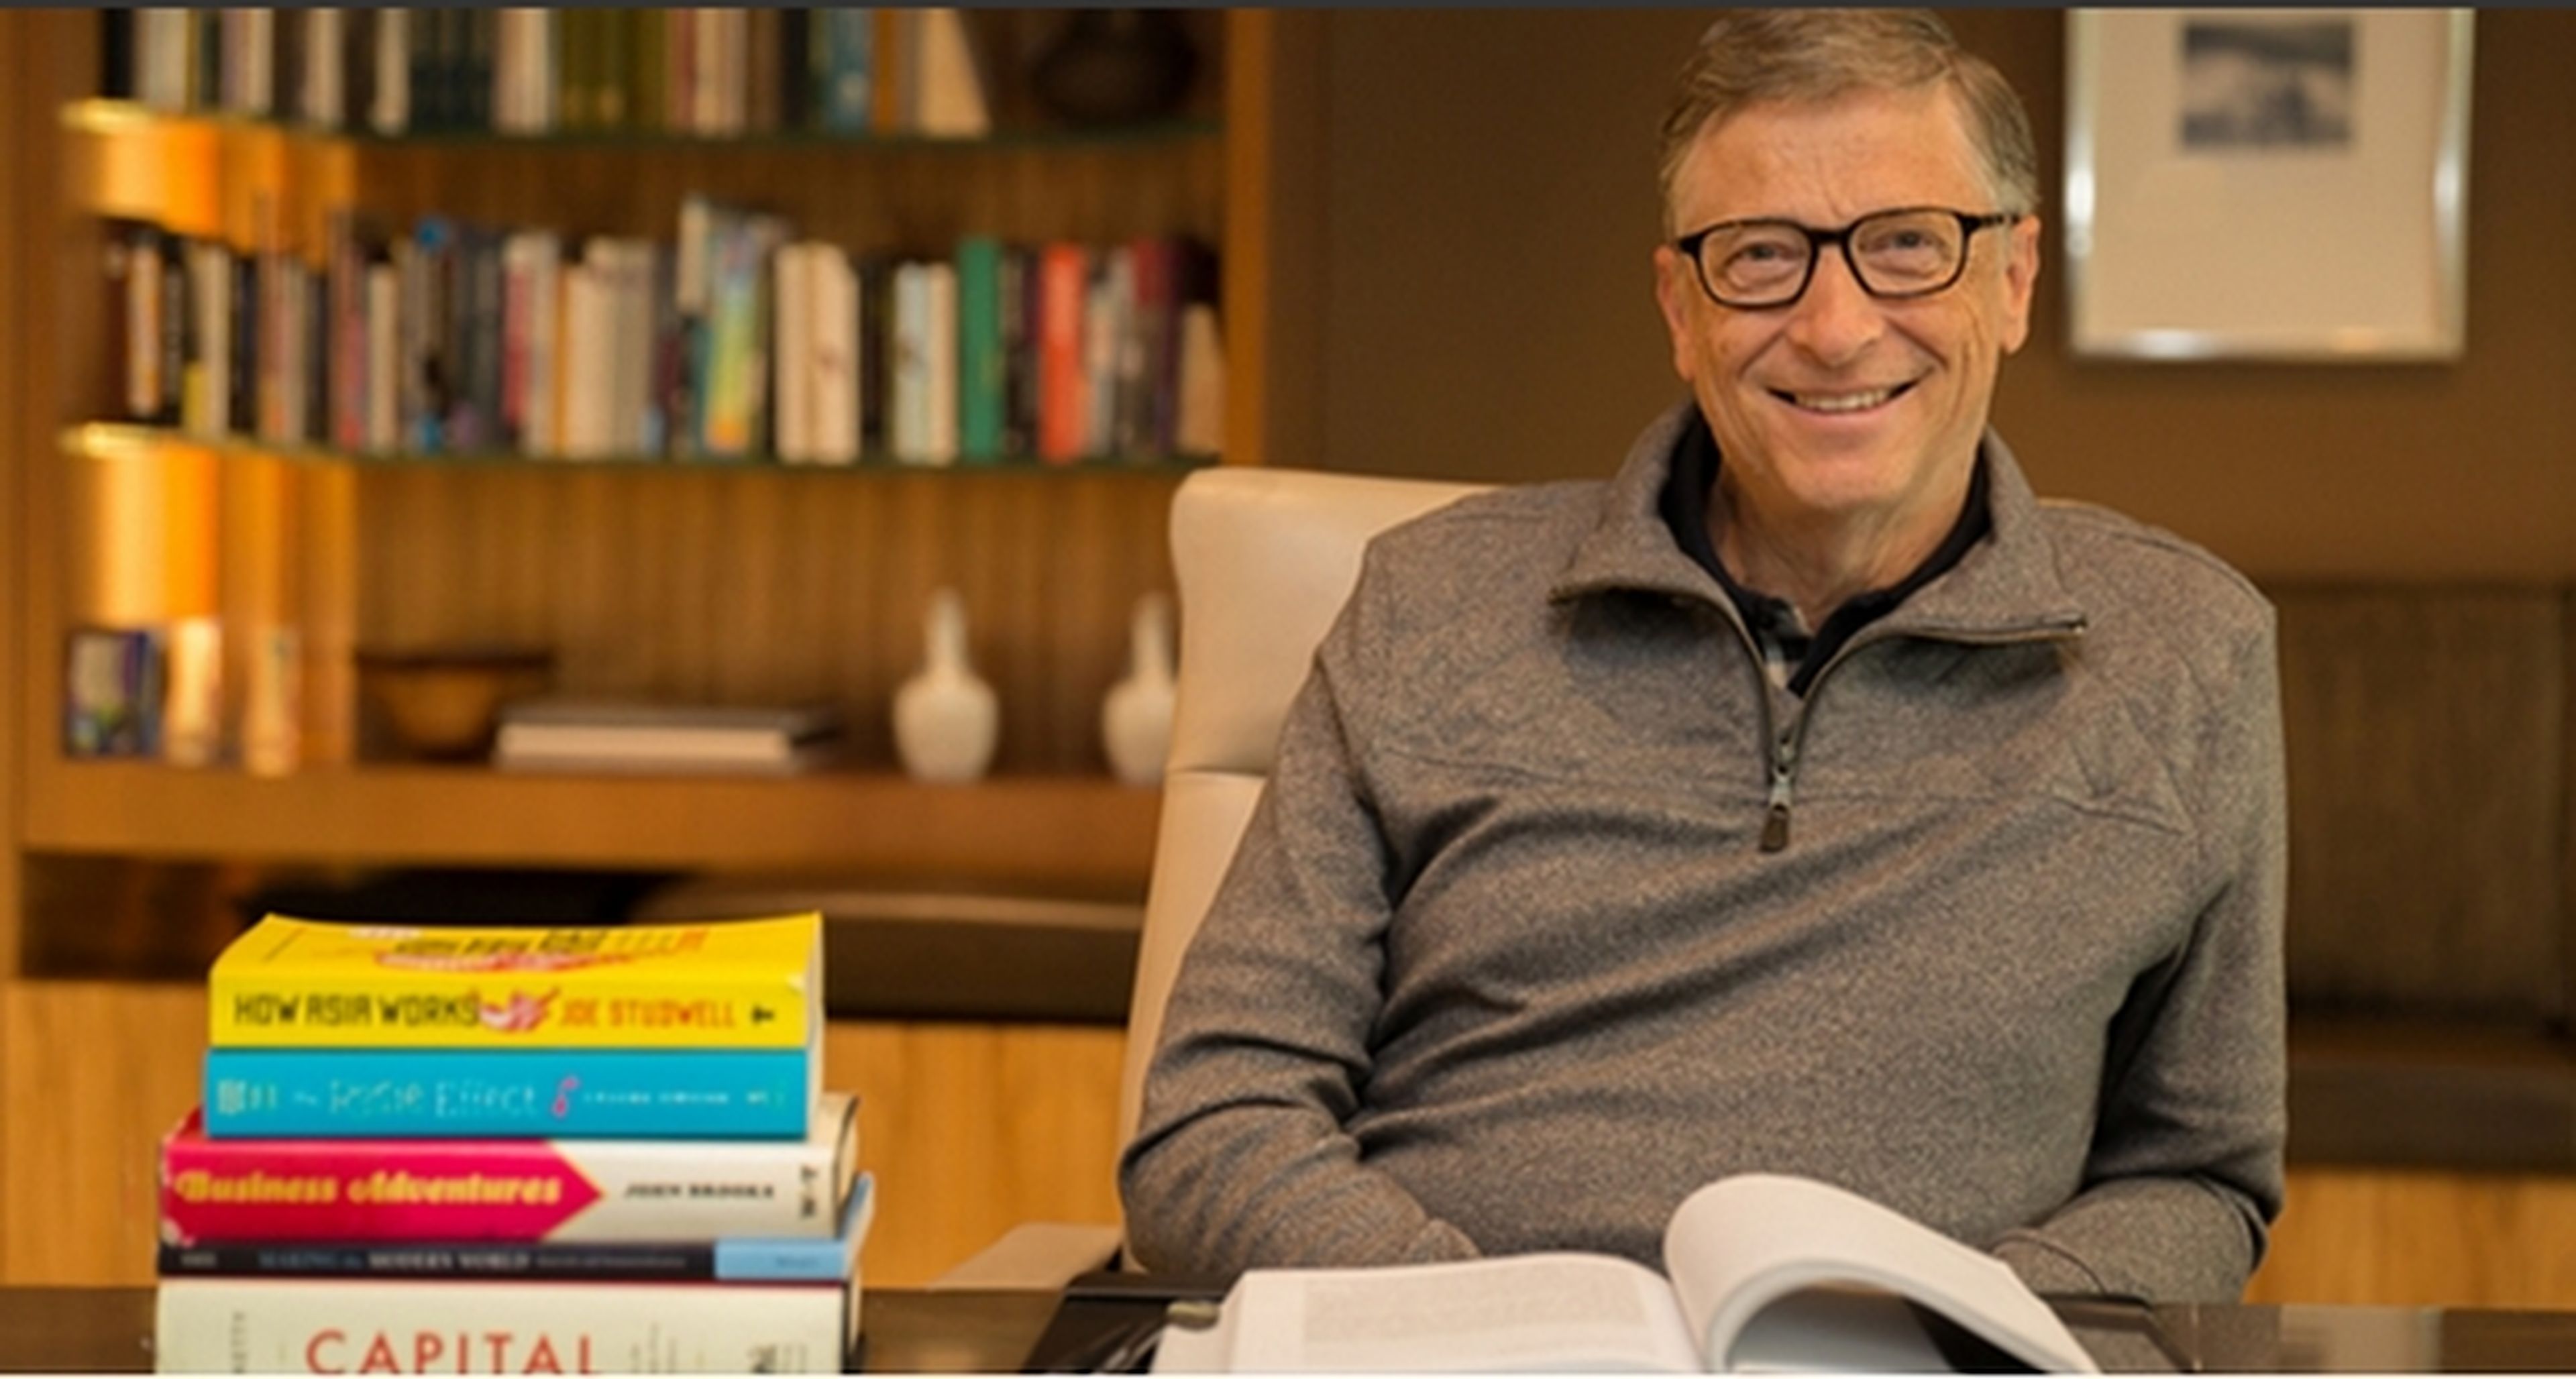 Mejores Libros de 2014 según Bill Gates